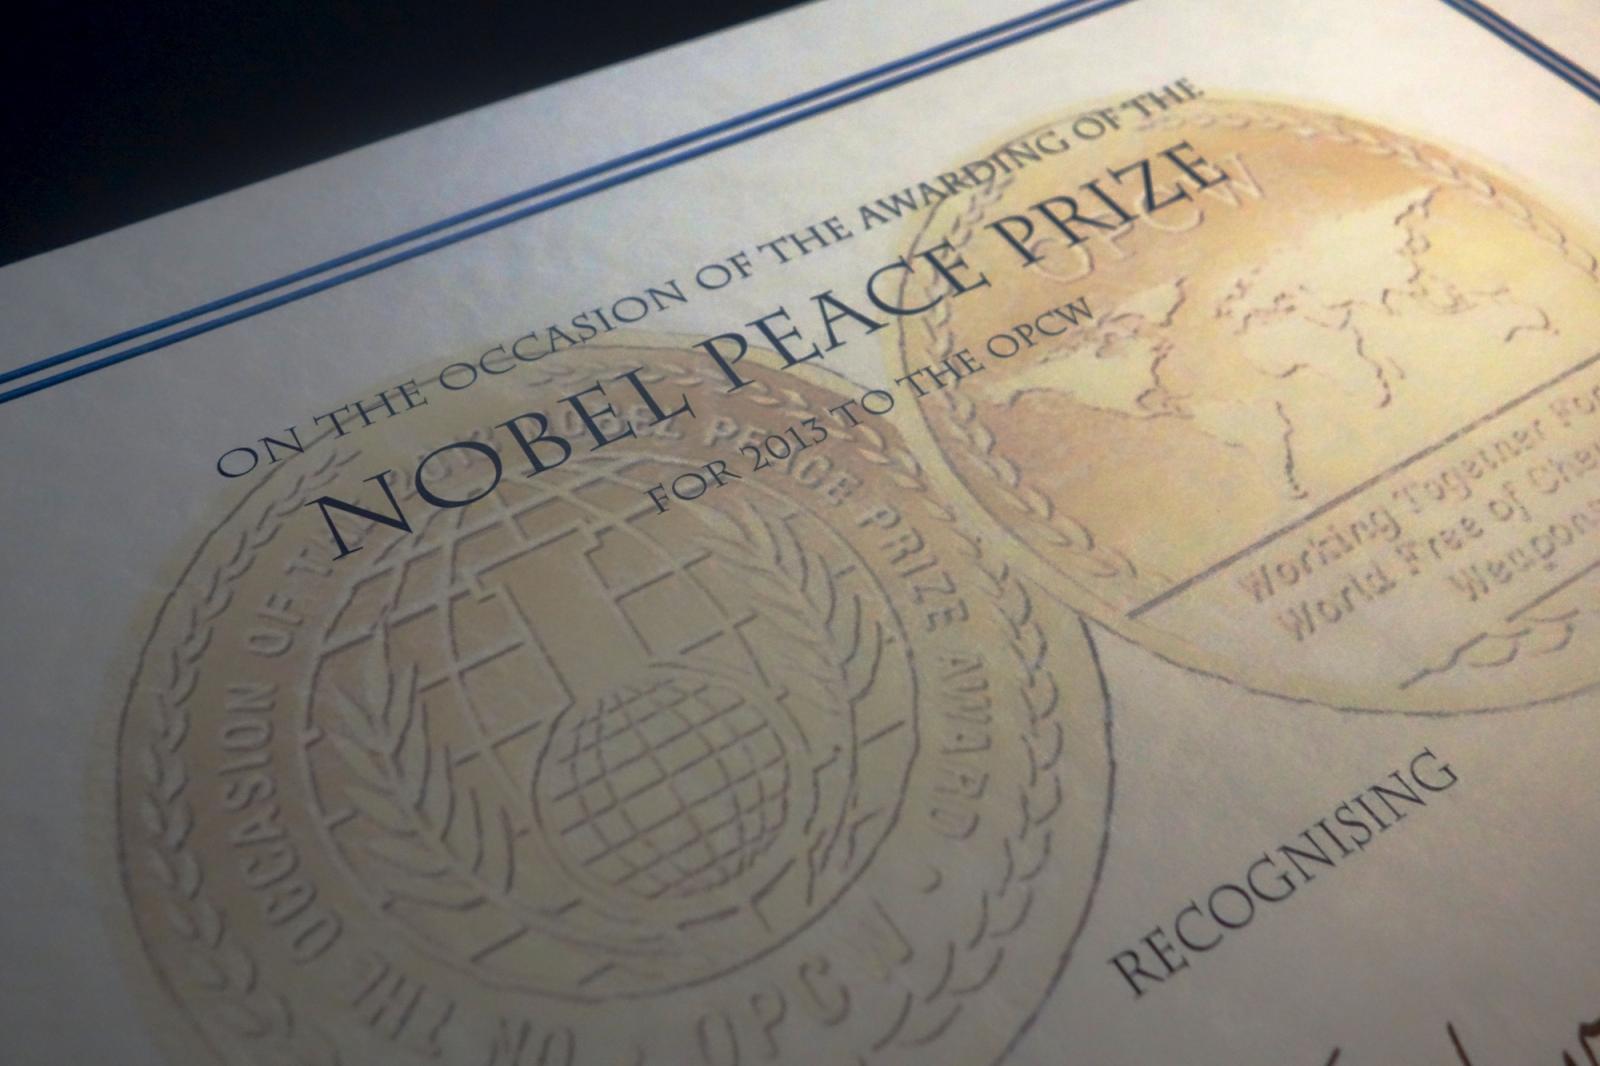 nobel peace prize certificate